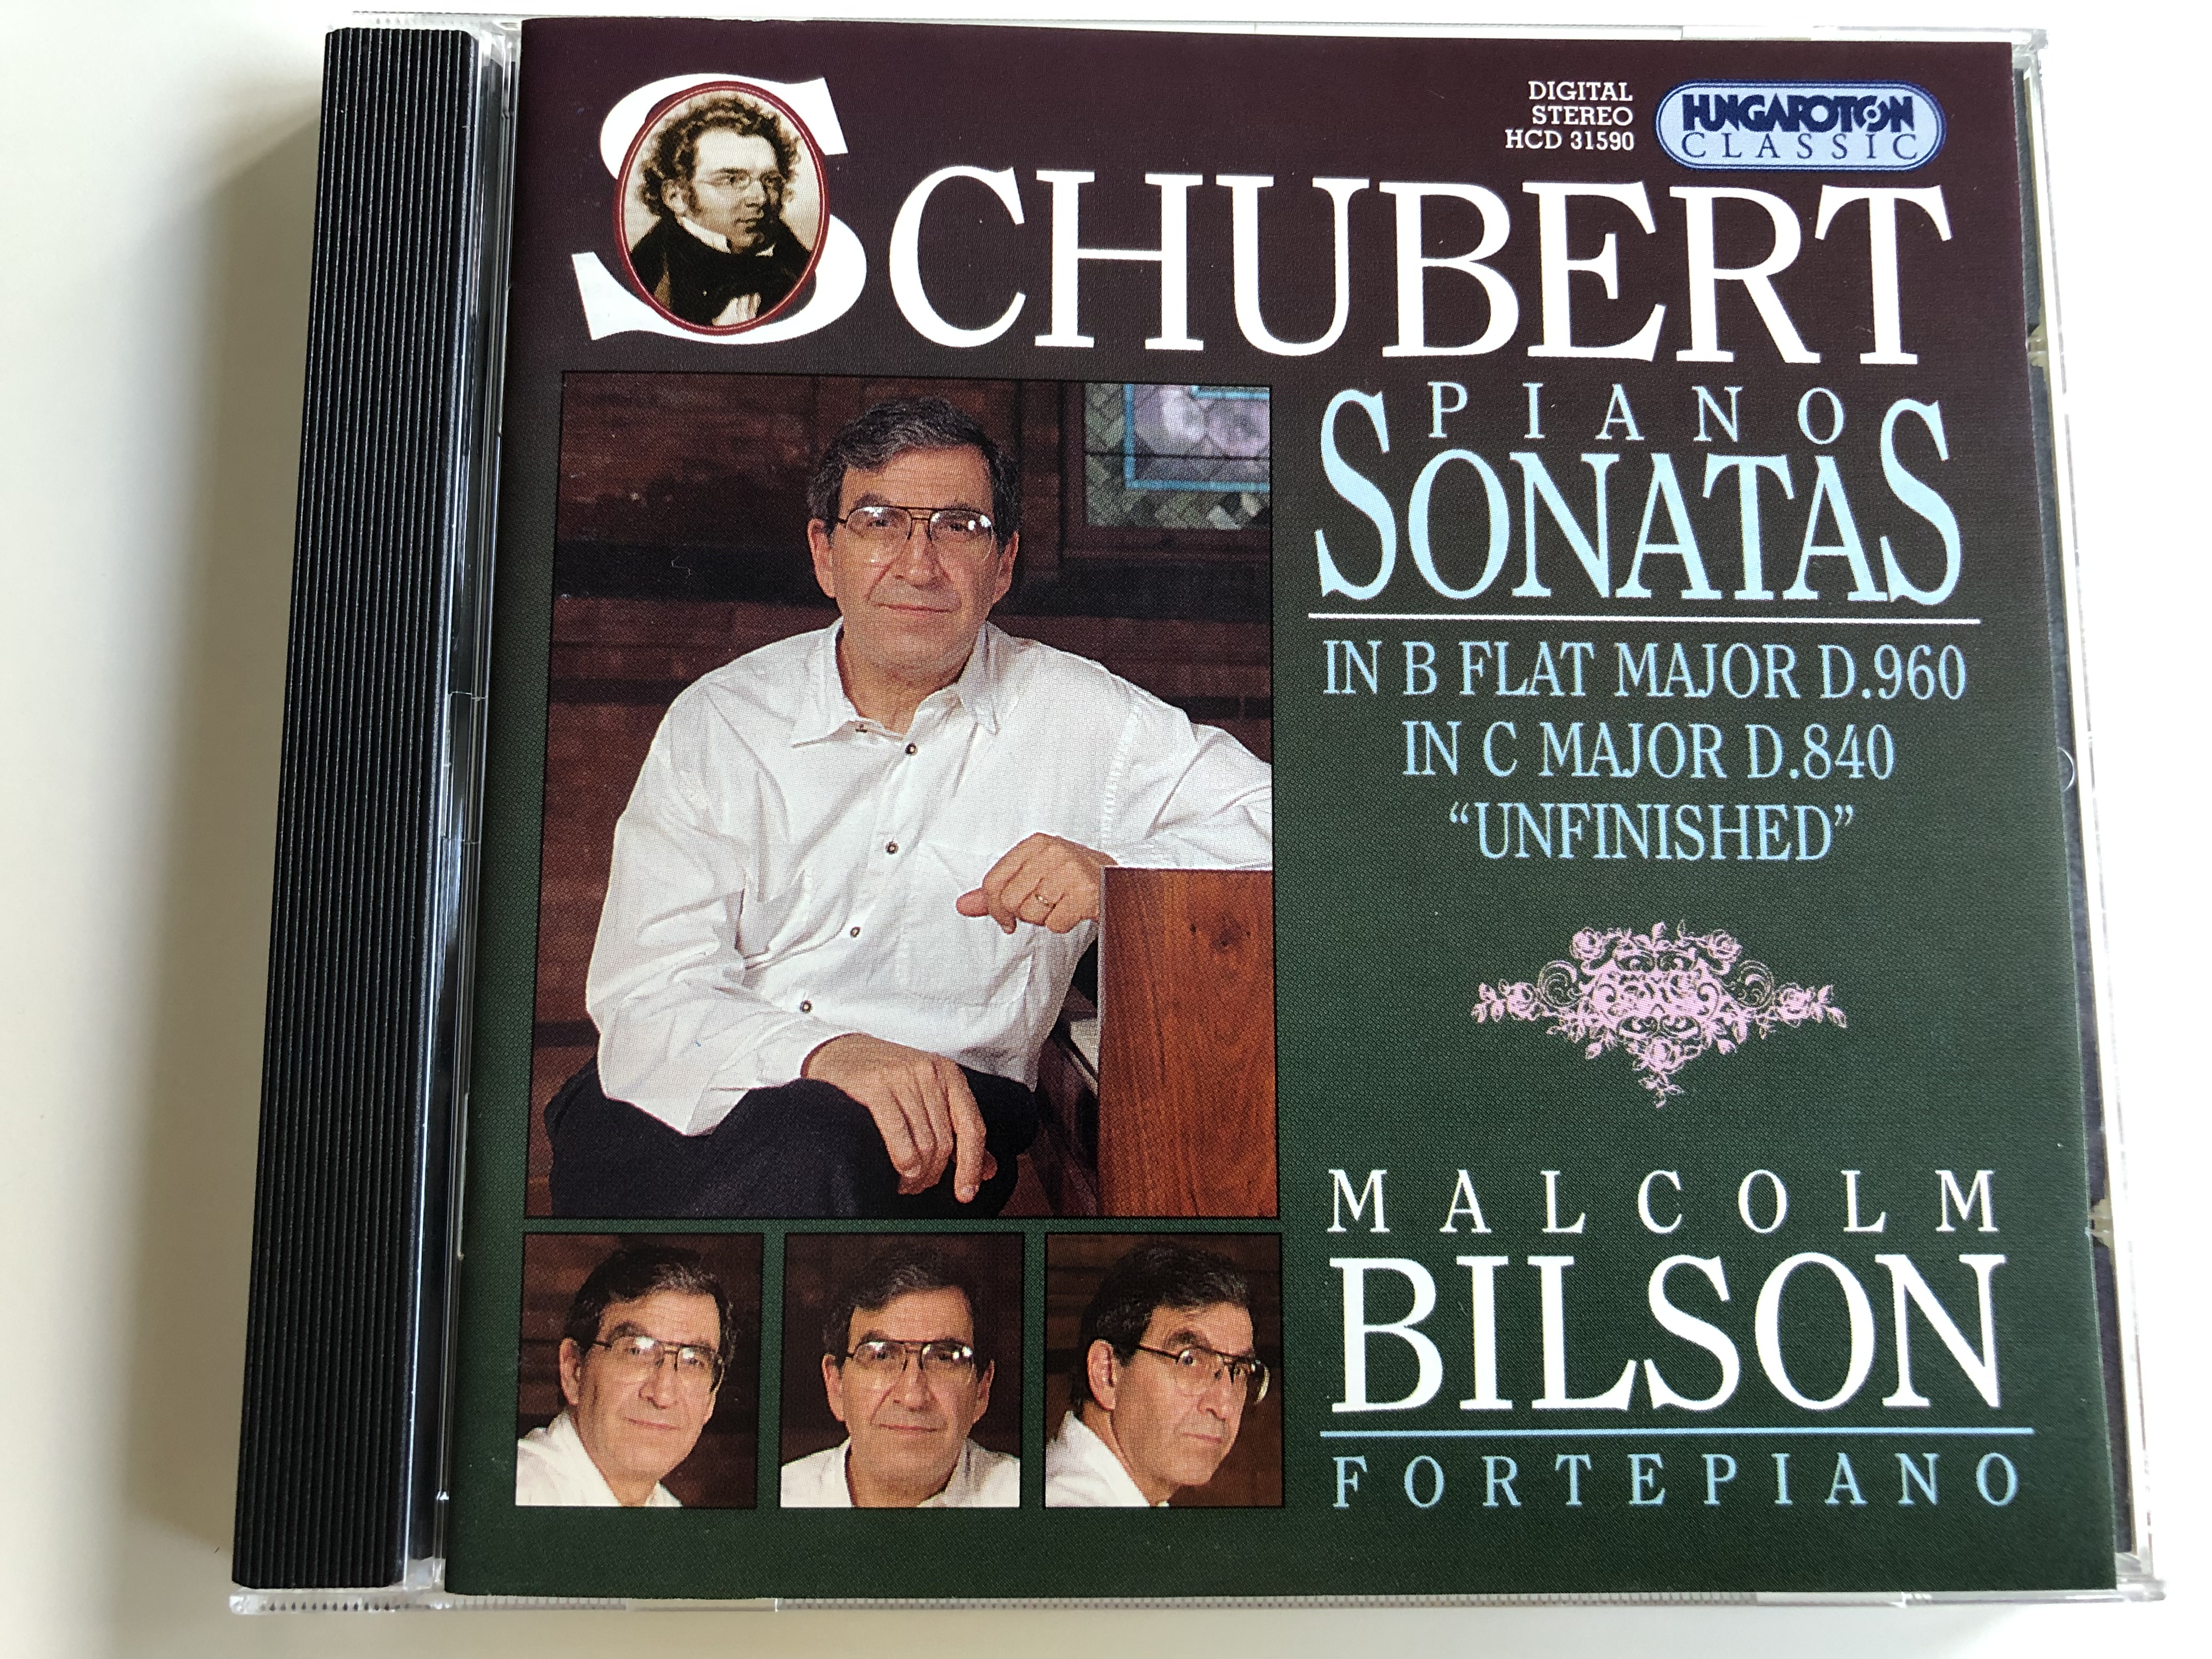 schubert-piano-sonatas-in-b-flat-major-d.960-in-c-major-d.-840-unfinshed-malcolm-bilson-fortepiano-hungaroton-classic-hcd-31590-audio-cd-1999-1-.jpg